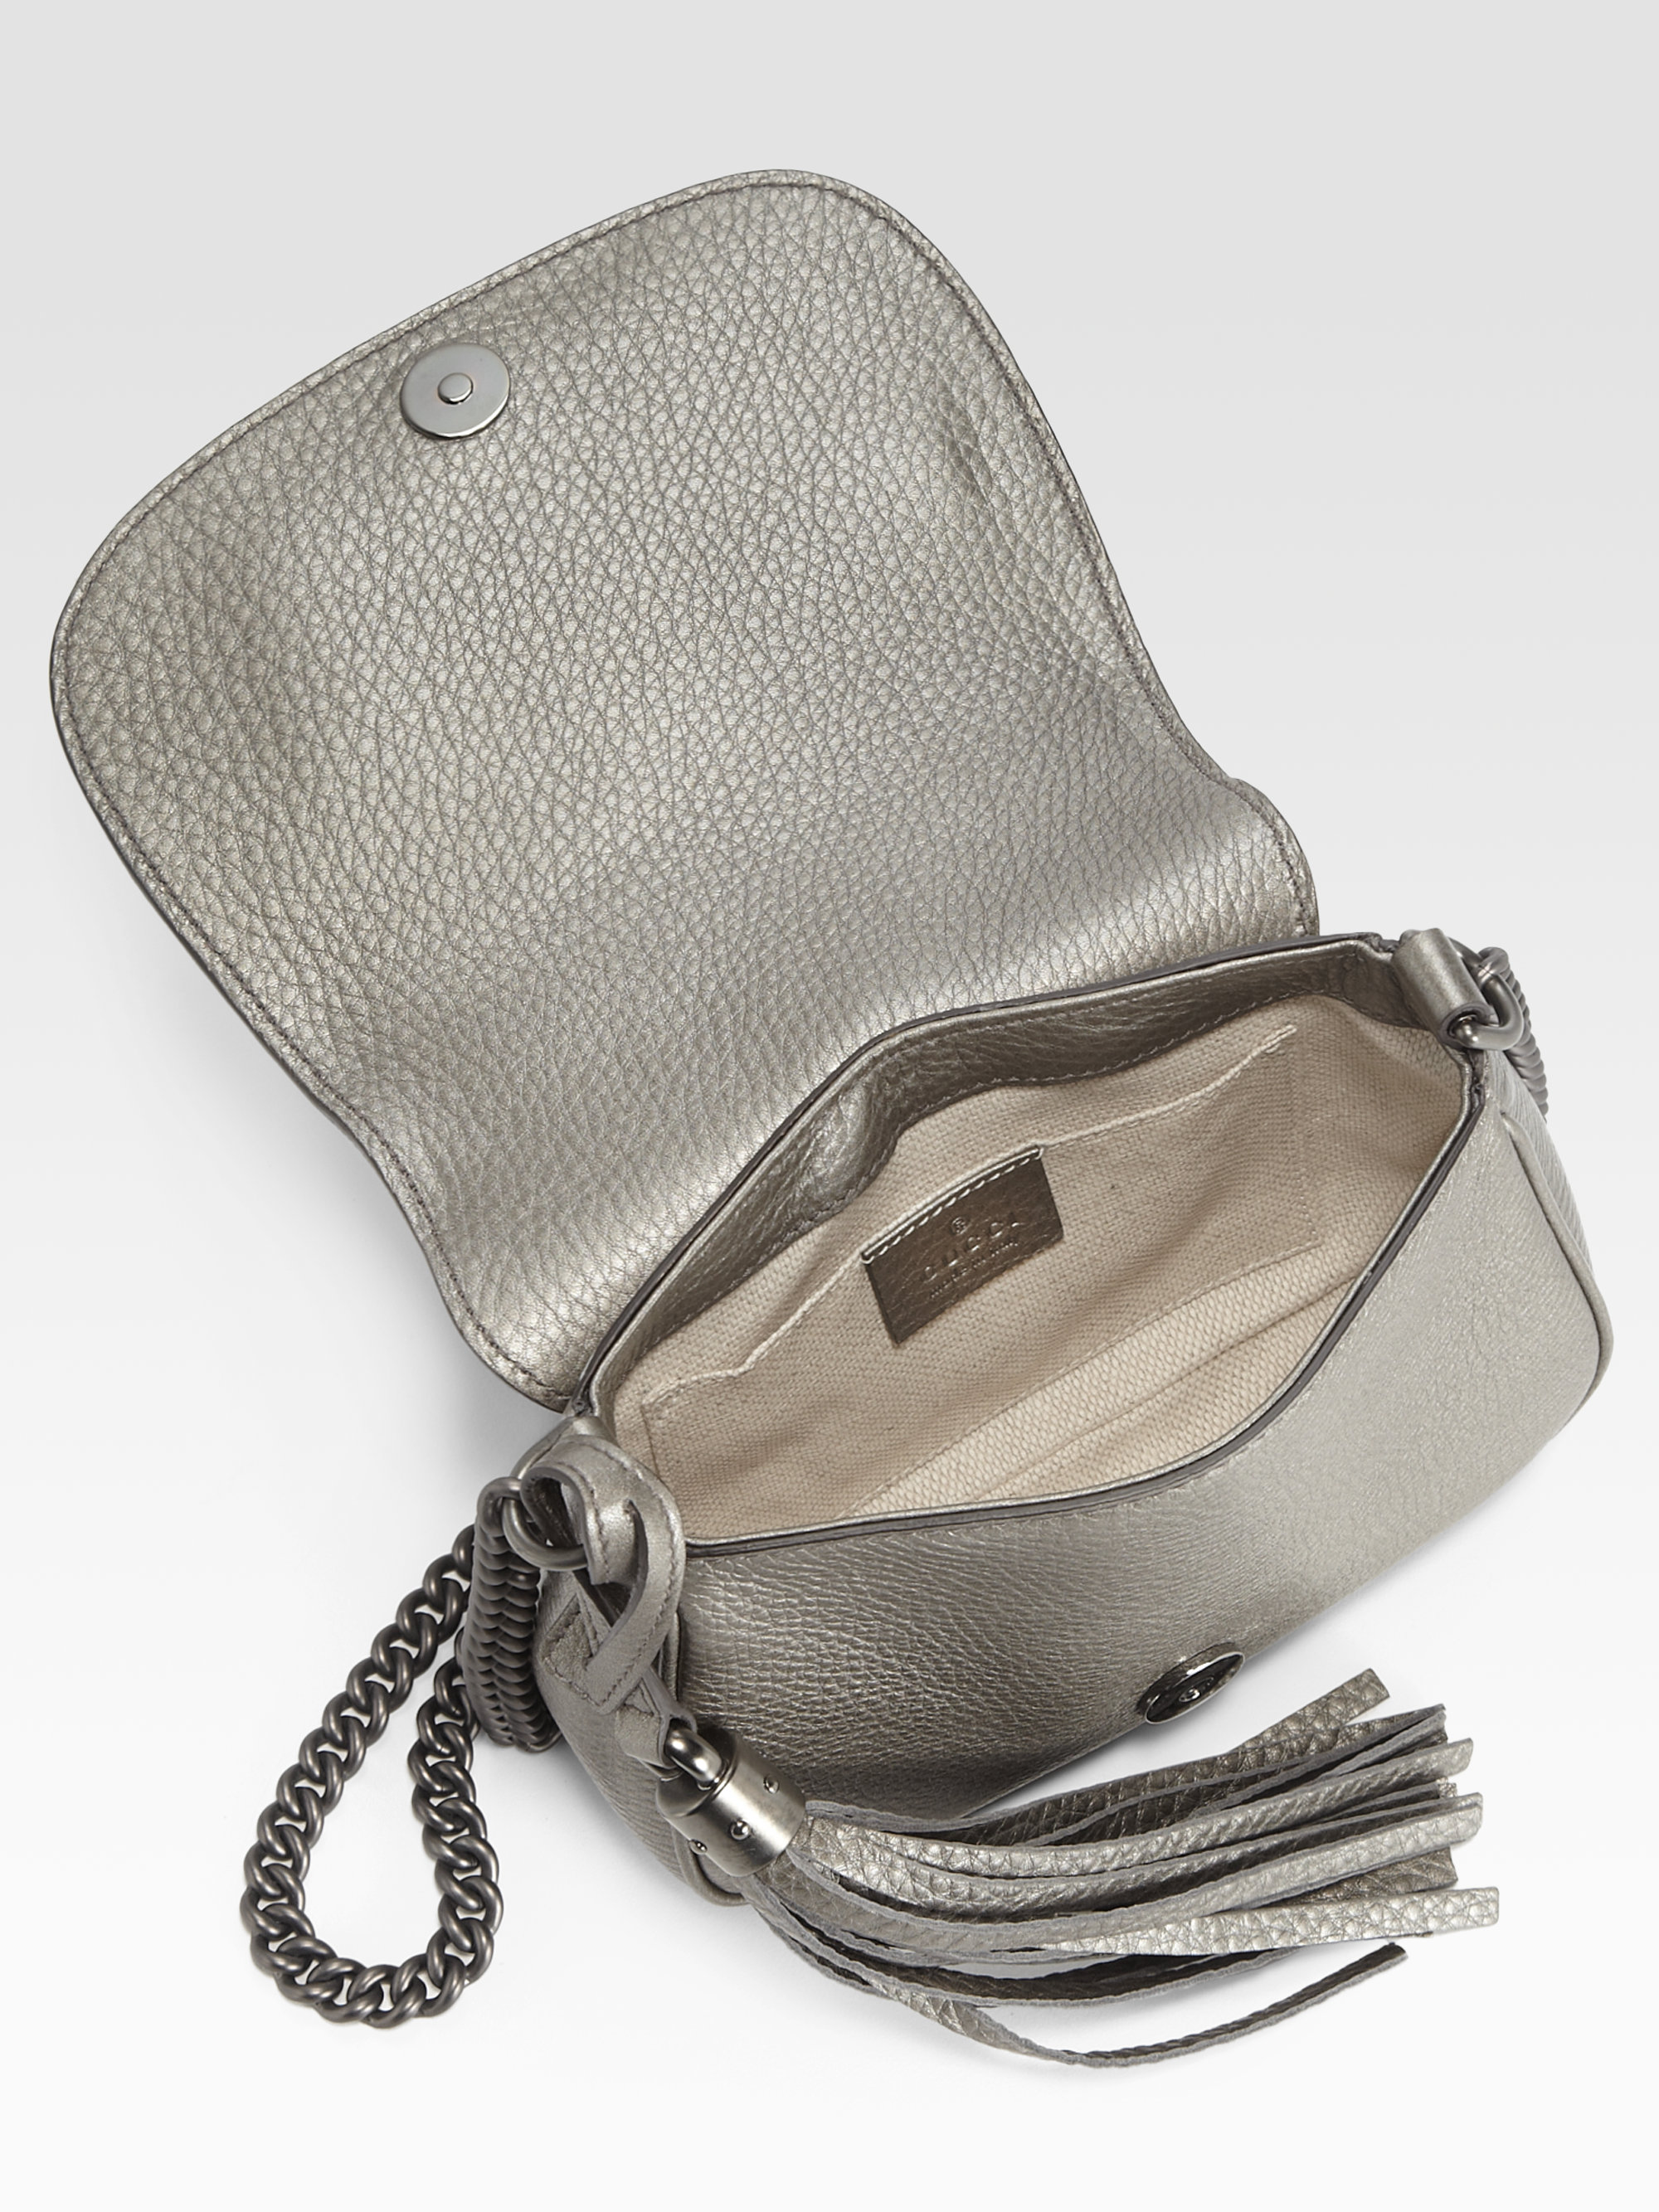 Gucci Soho Metallic Leather Chain Shoulder Bag - Lyst